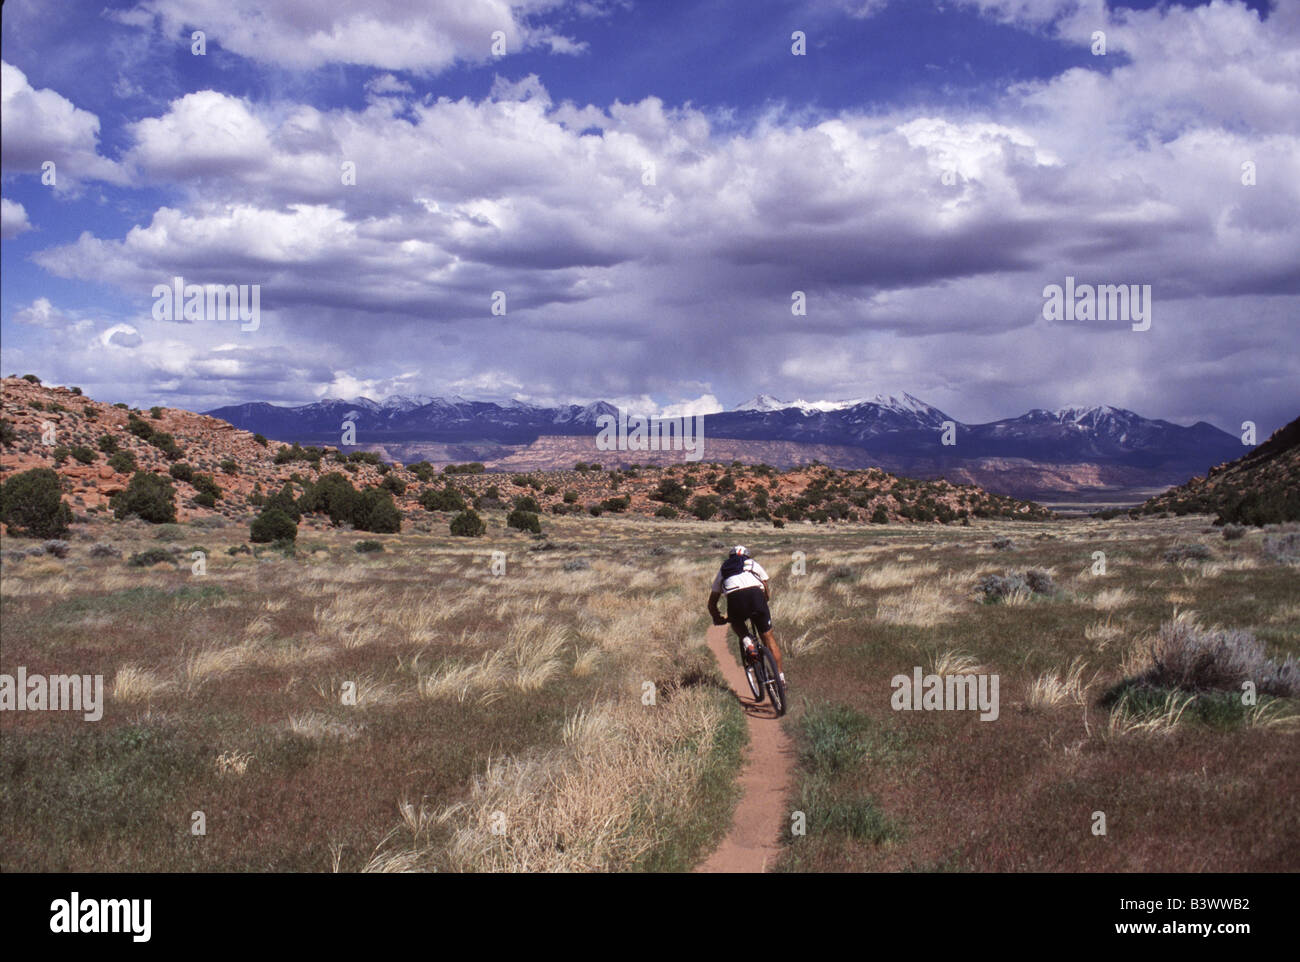 Rear view of a person mountain biking on a dusty trail, Utah, USA Stock Photo